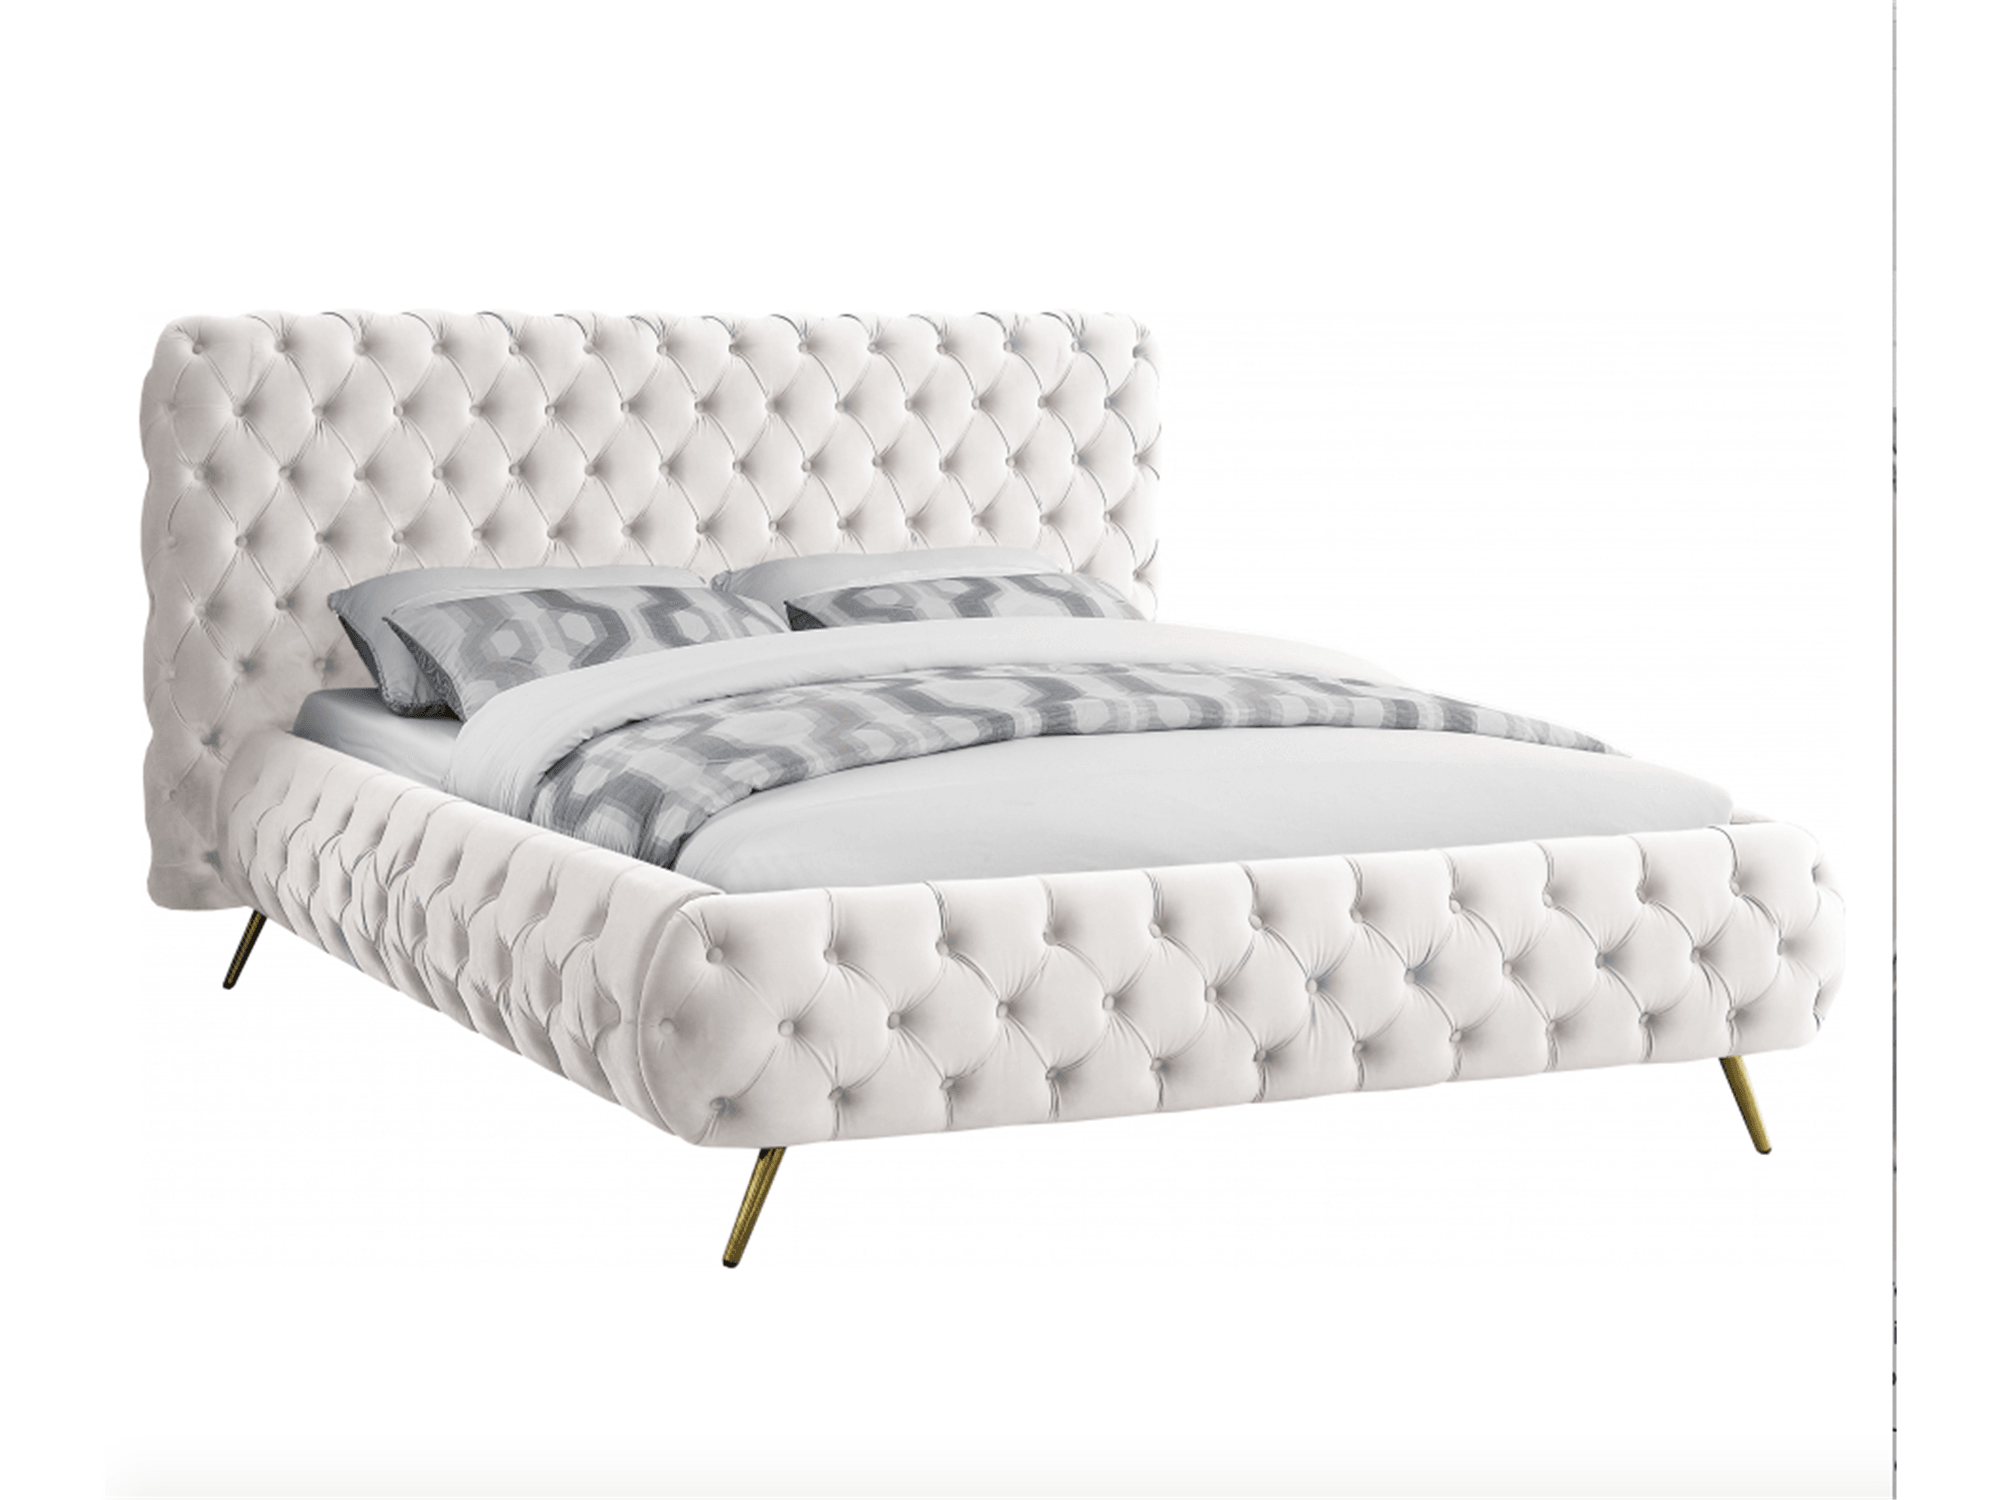 Delani King Bed - Euro Living Furniture